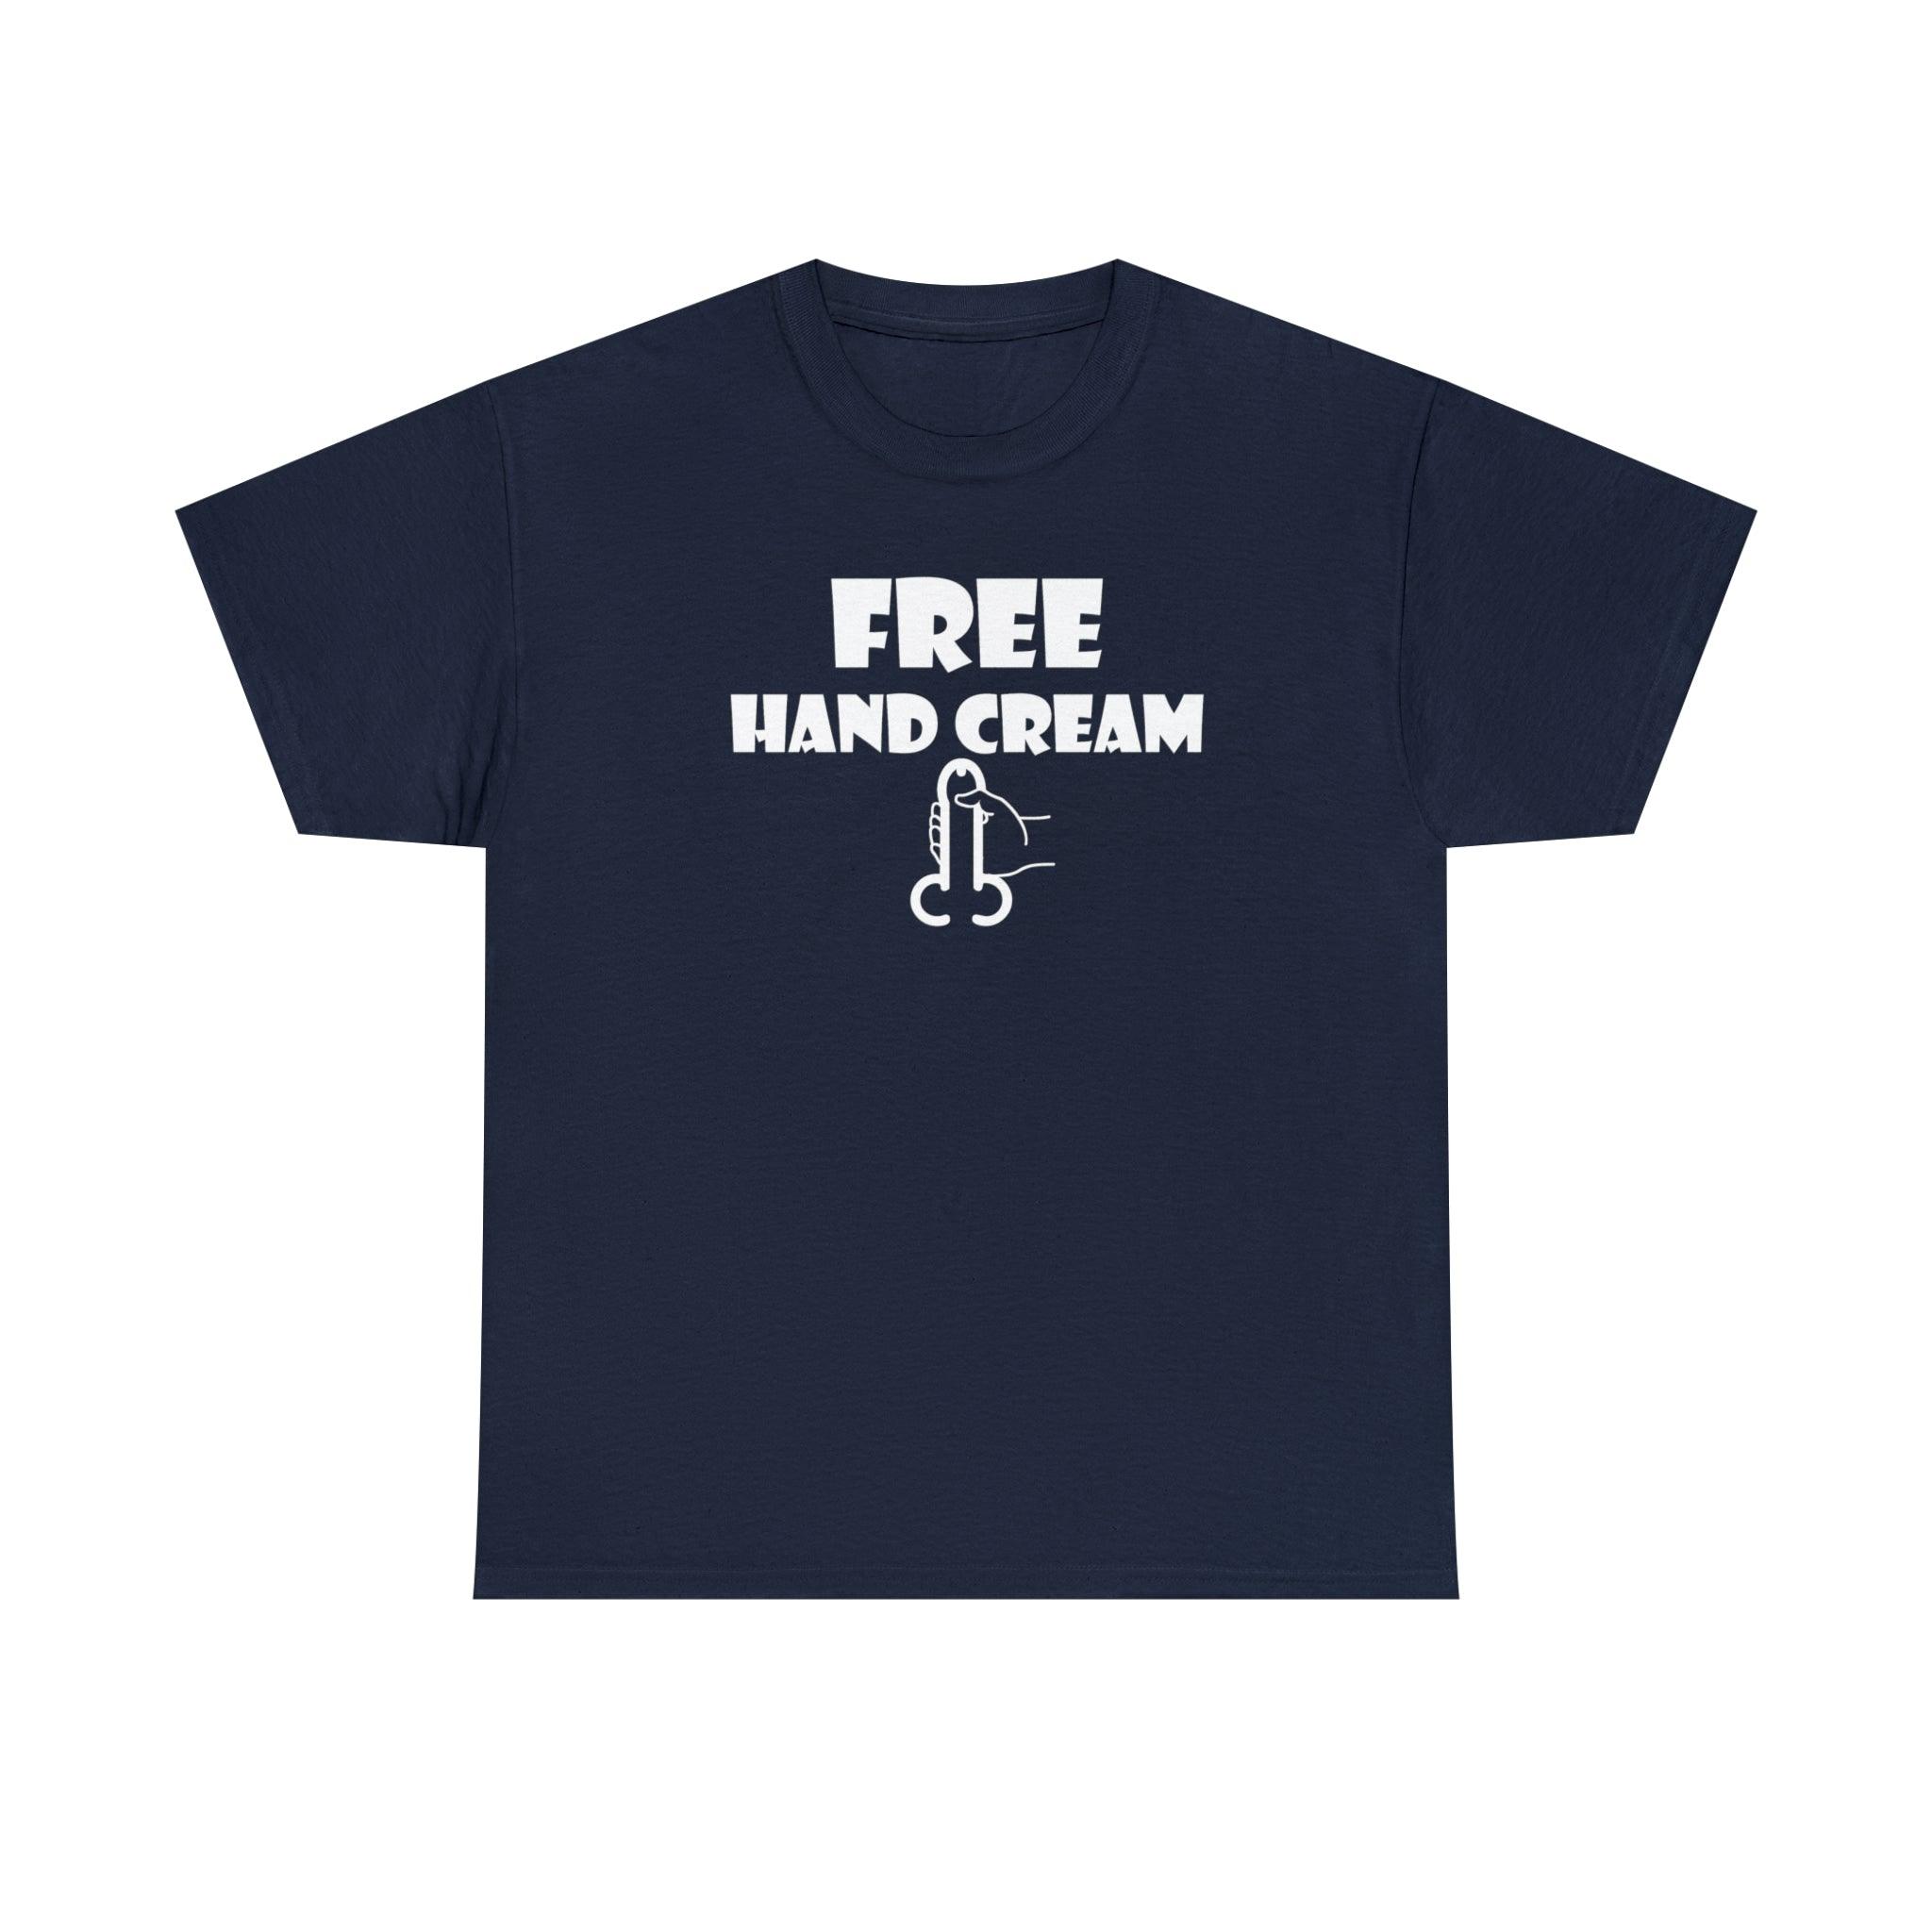 Free Hand Cream funny mens humor t-shirt about masturbation photo